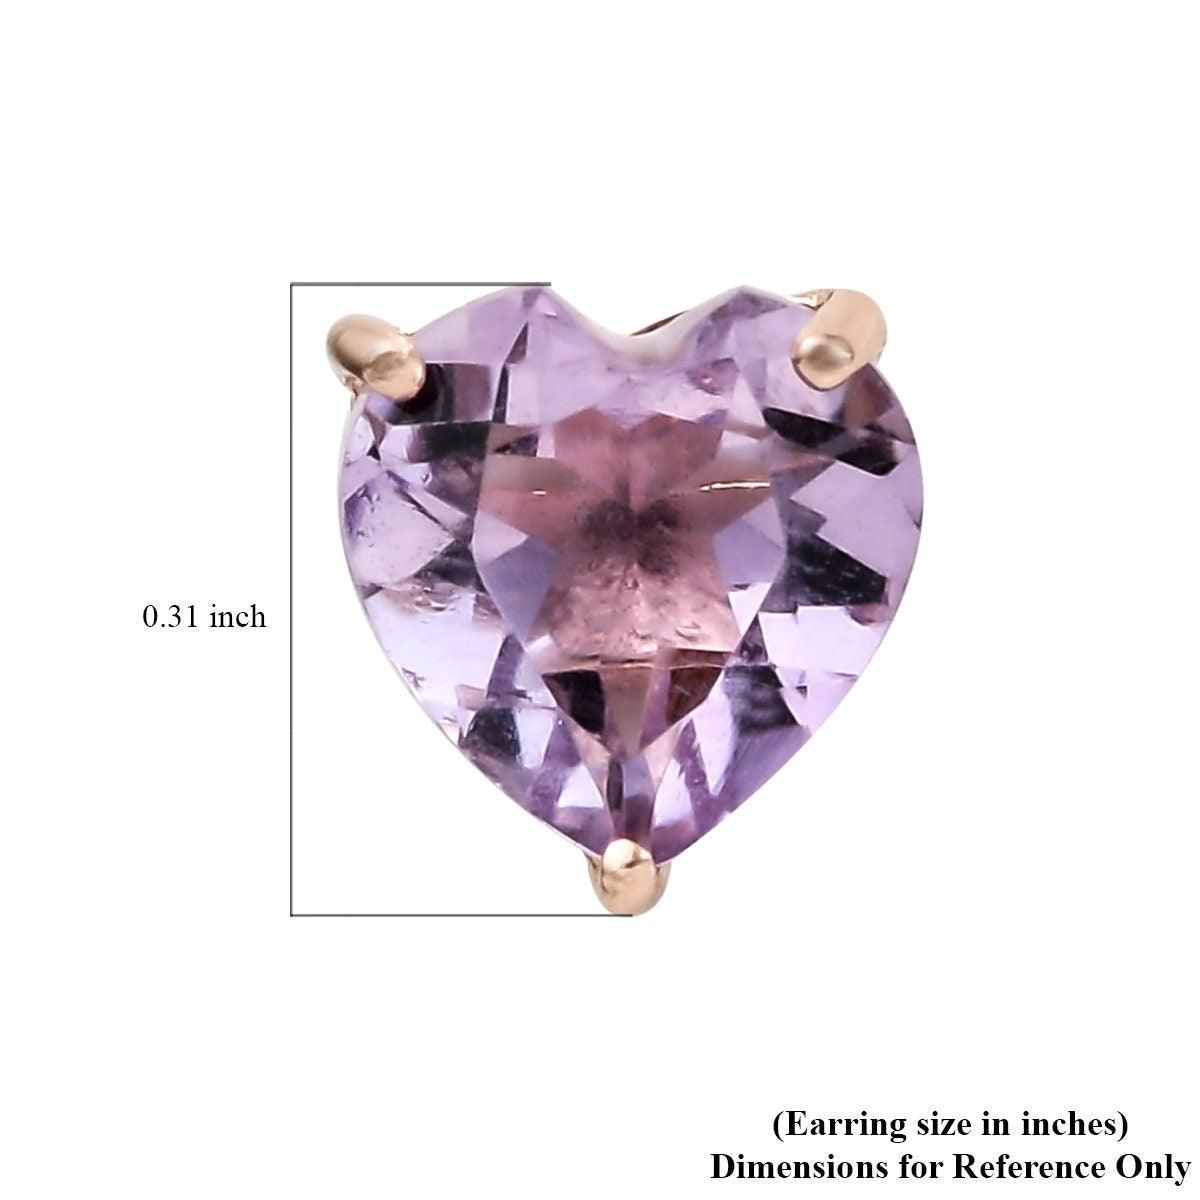 Pink Amethyst Heart Gemstone earrings , 925 Sterling Silver Stud , Rose Gold , Pink Gemstone Heart Studs by Inspiring Jewellery - Inspiring Jewellery